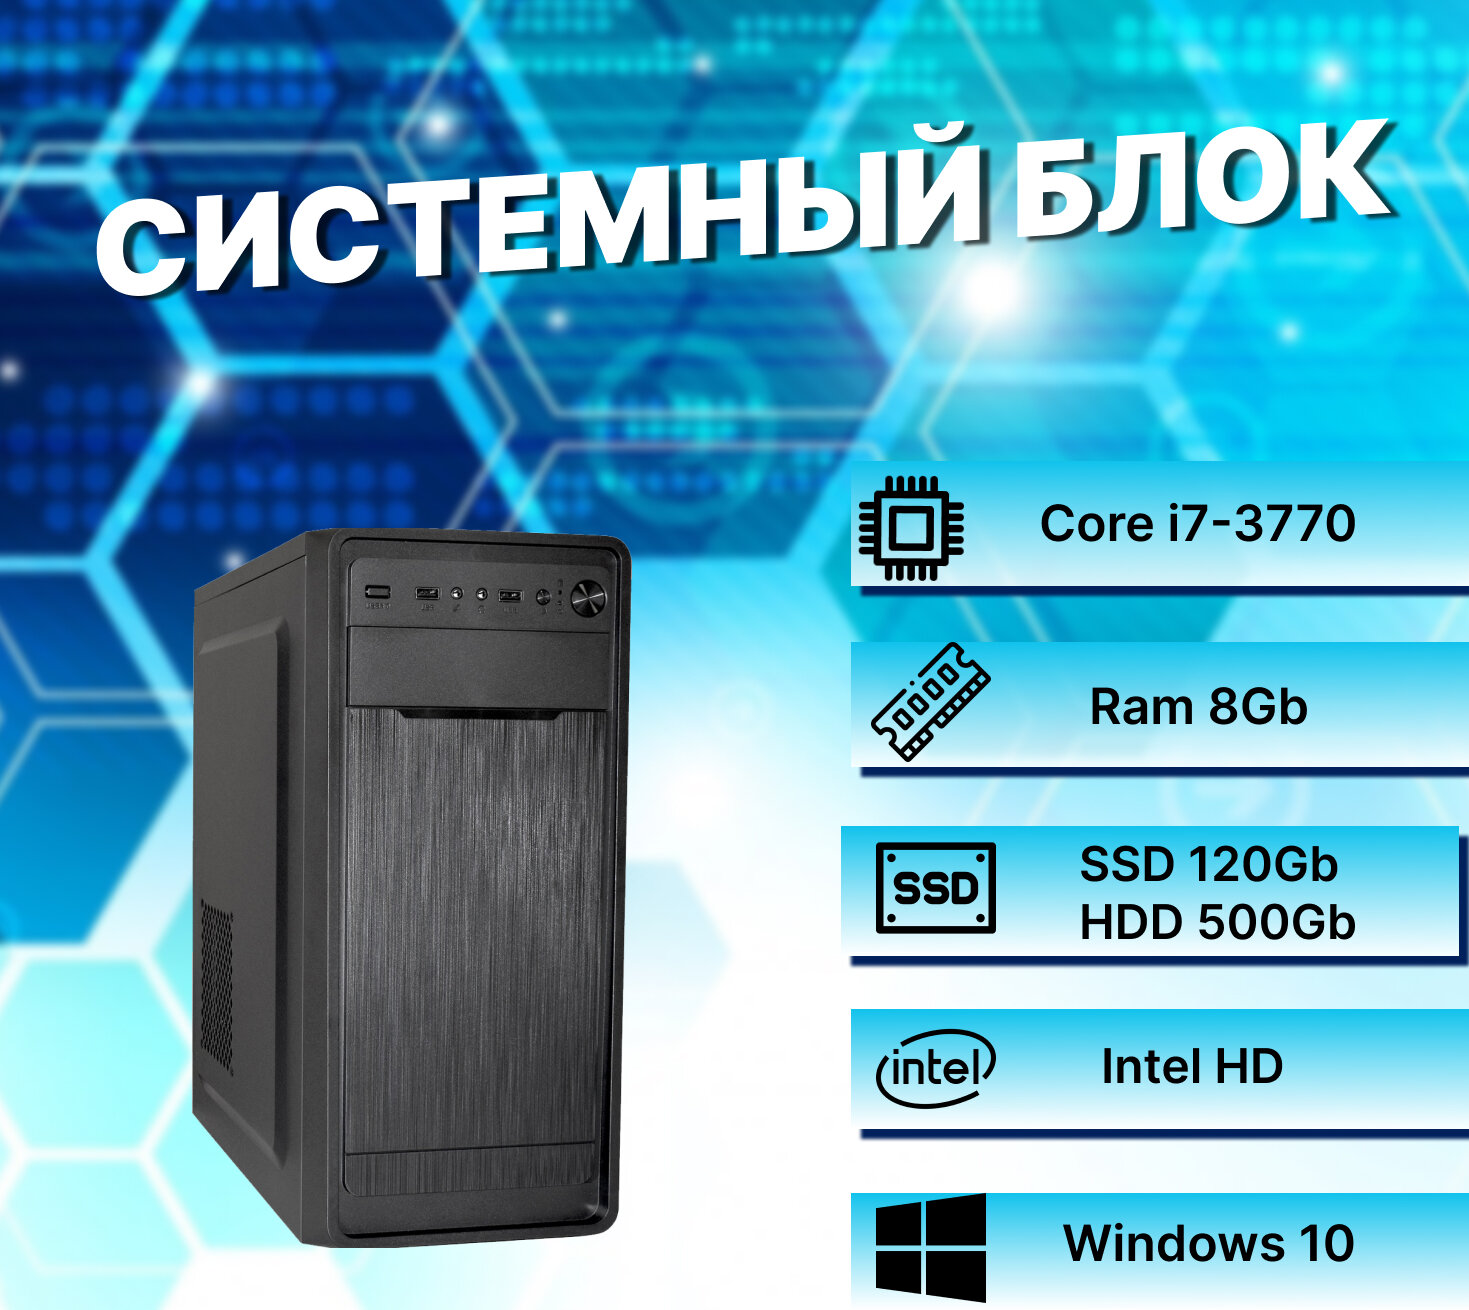 Системный блок Intel Core I7-3770 (3.4ГГц)/ RAM 8Gb/ SSD 120Gb/ HDD 500Gb/ Intel HD/ Windows 10 Pro